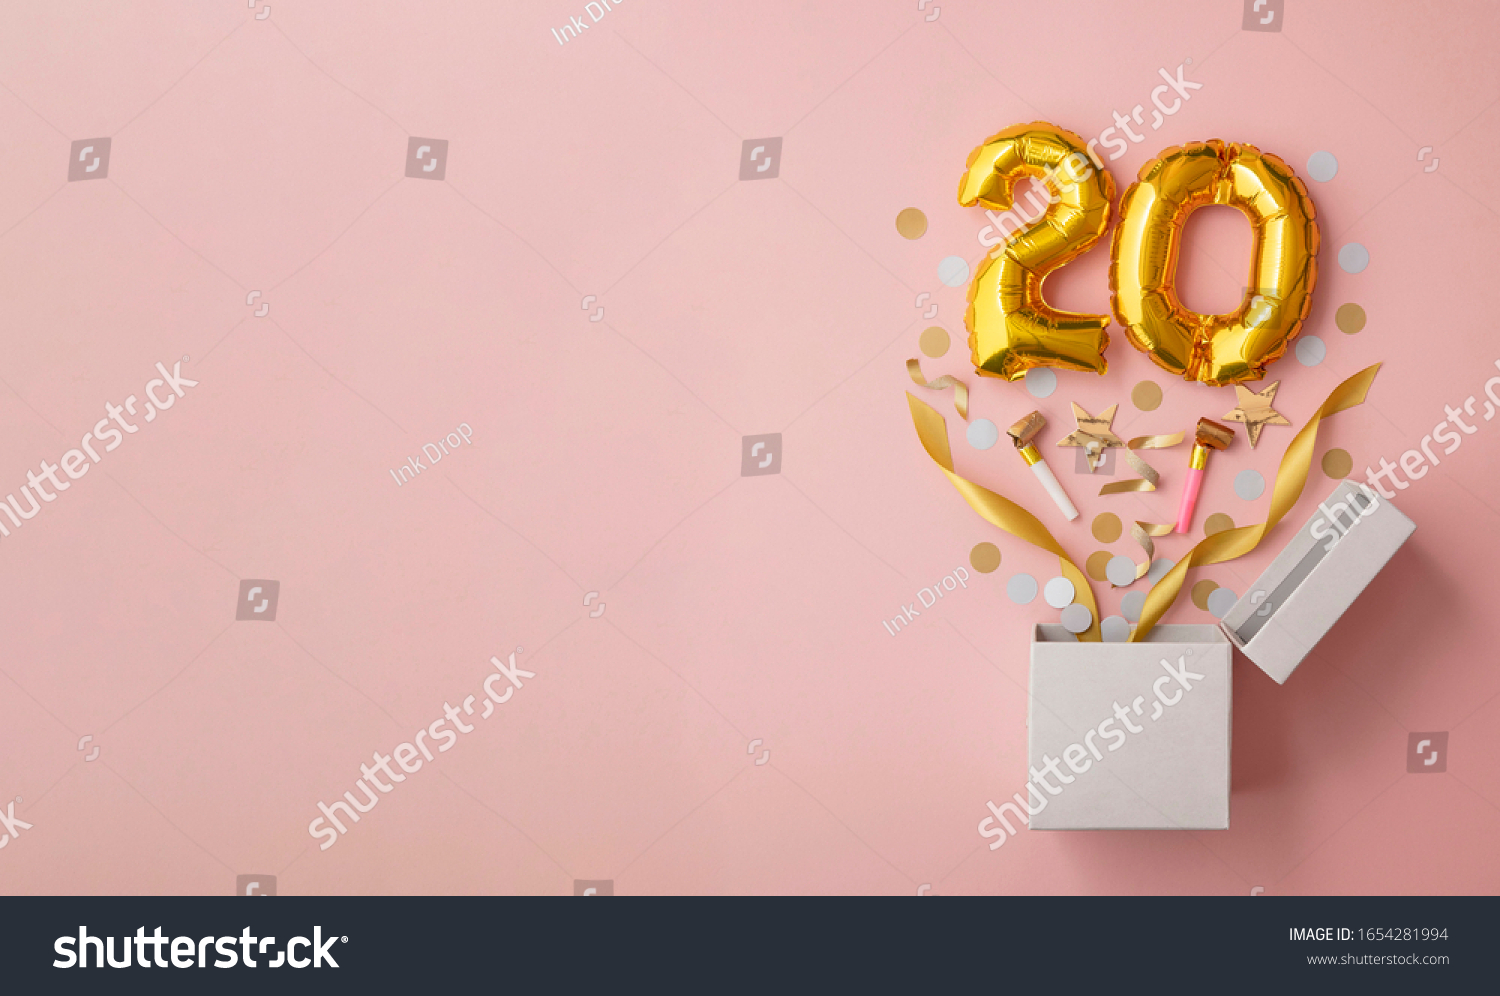 Number 20 birthday balloon celebration gift box lay flat explosion #1654281994